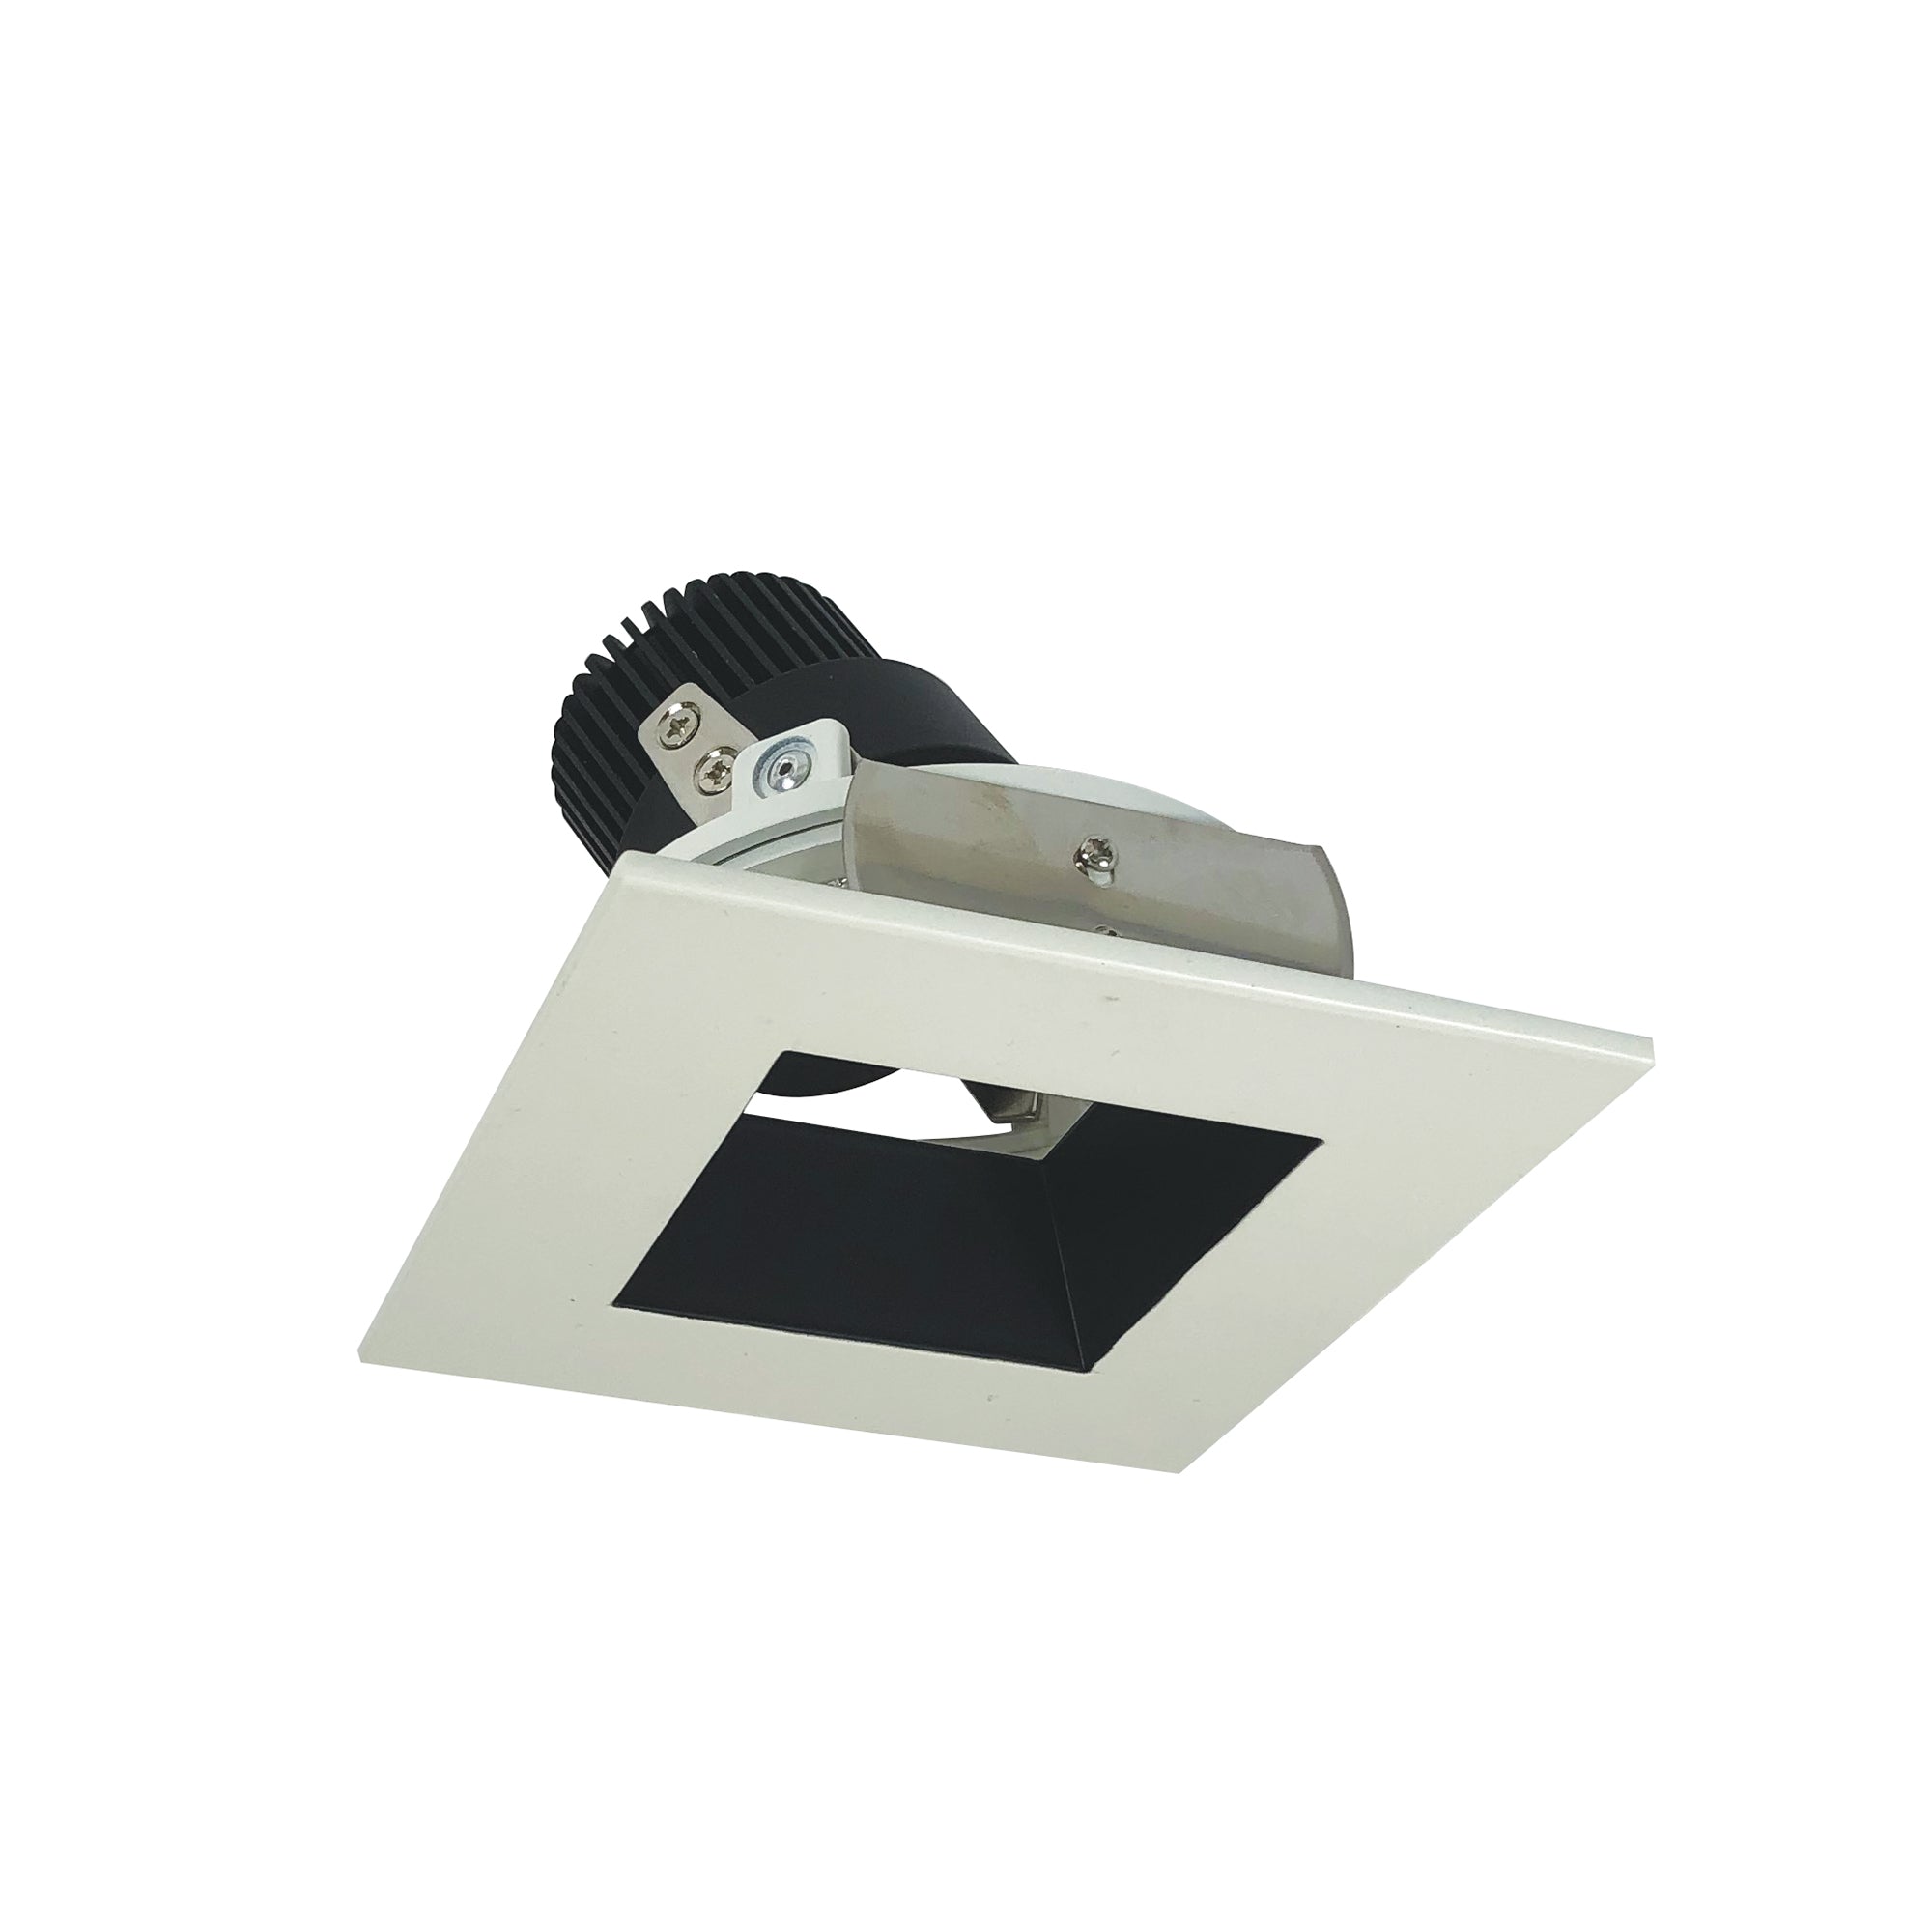 Nora Lighting NIO-4SDSQ50XBW 4" Iolite LED Square Adjustable Reflector With Square Aperture, 800lm / 14W, 5000K - Black Reflector / White Flange